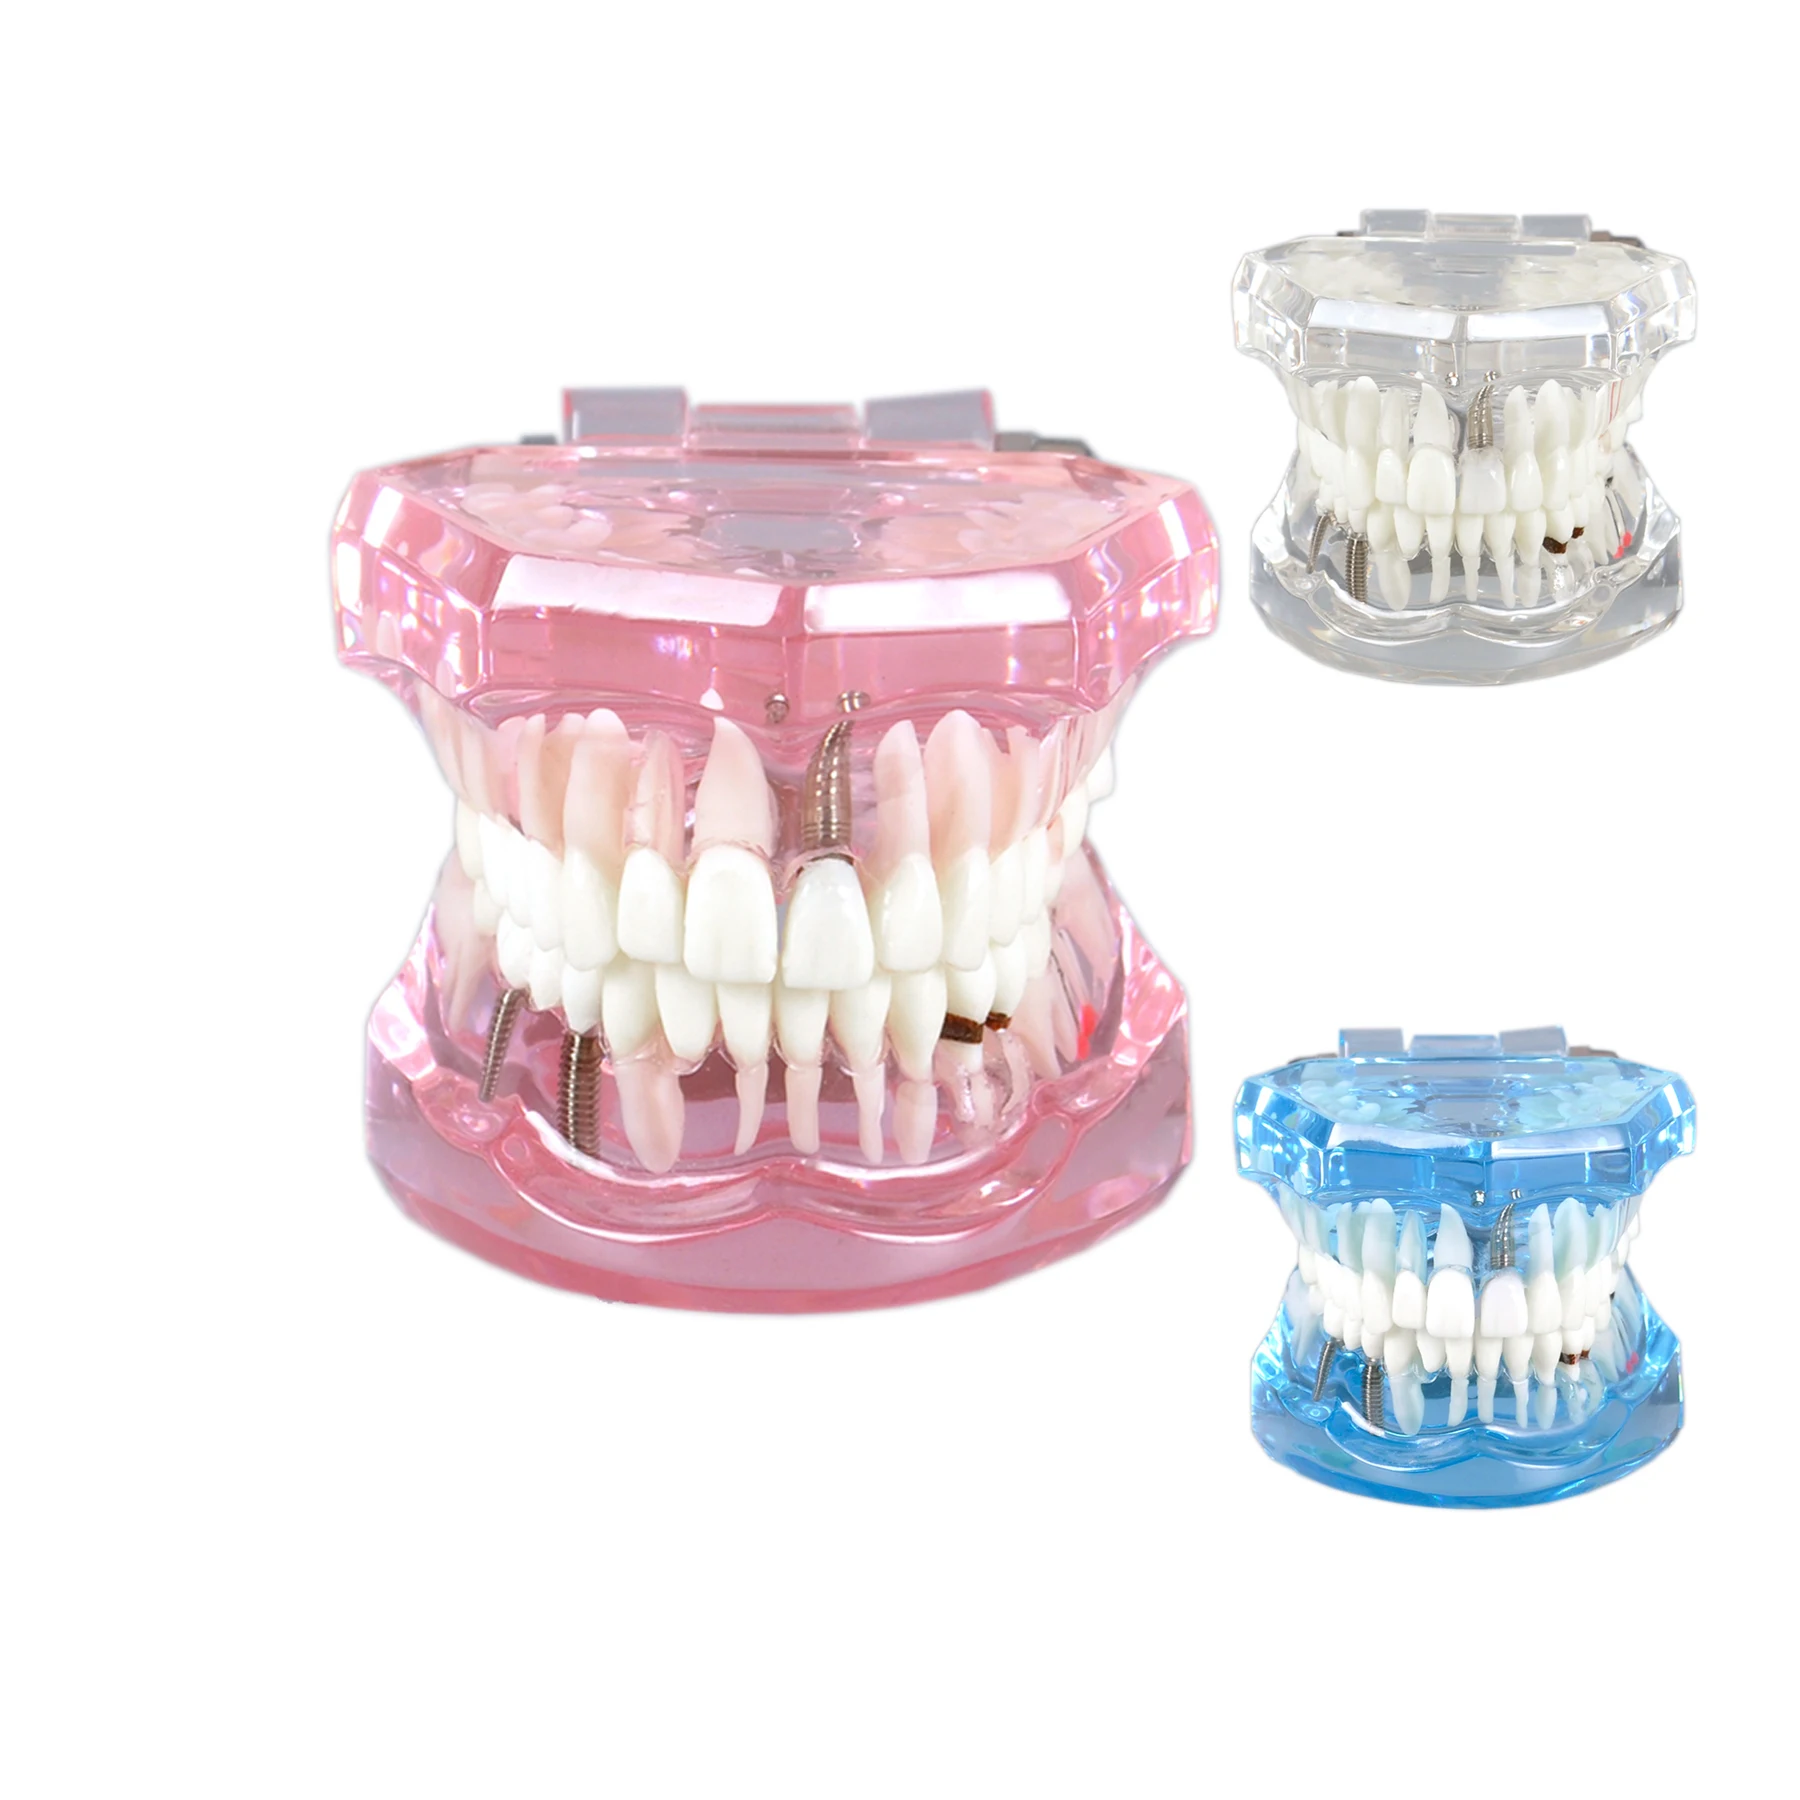 

Transparent Tooth Model Dental Disease Implant Teeth Model Removable, Dentist Standard Tooth Pathological Demonstration - Teach